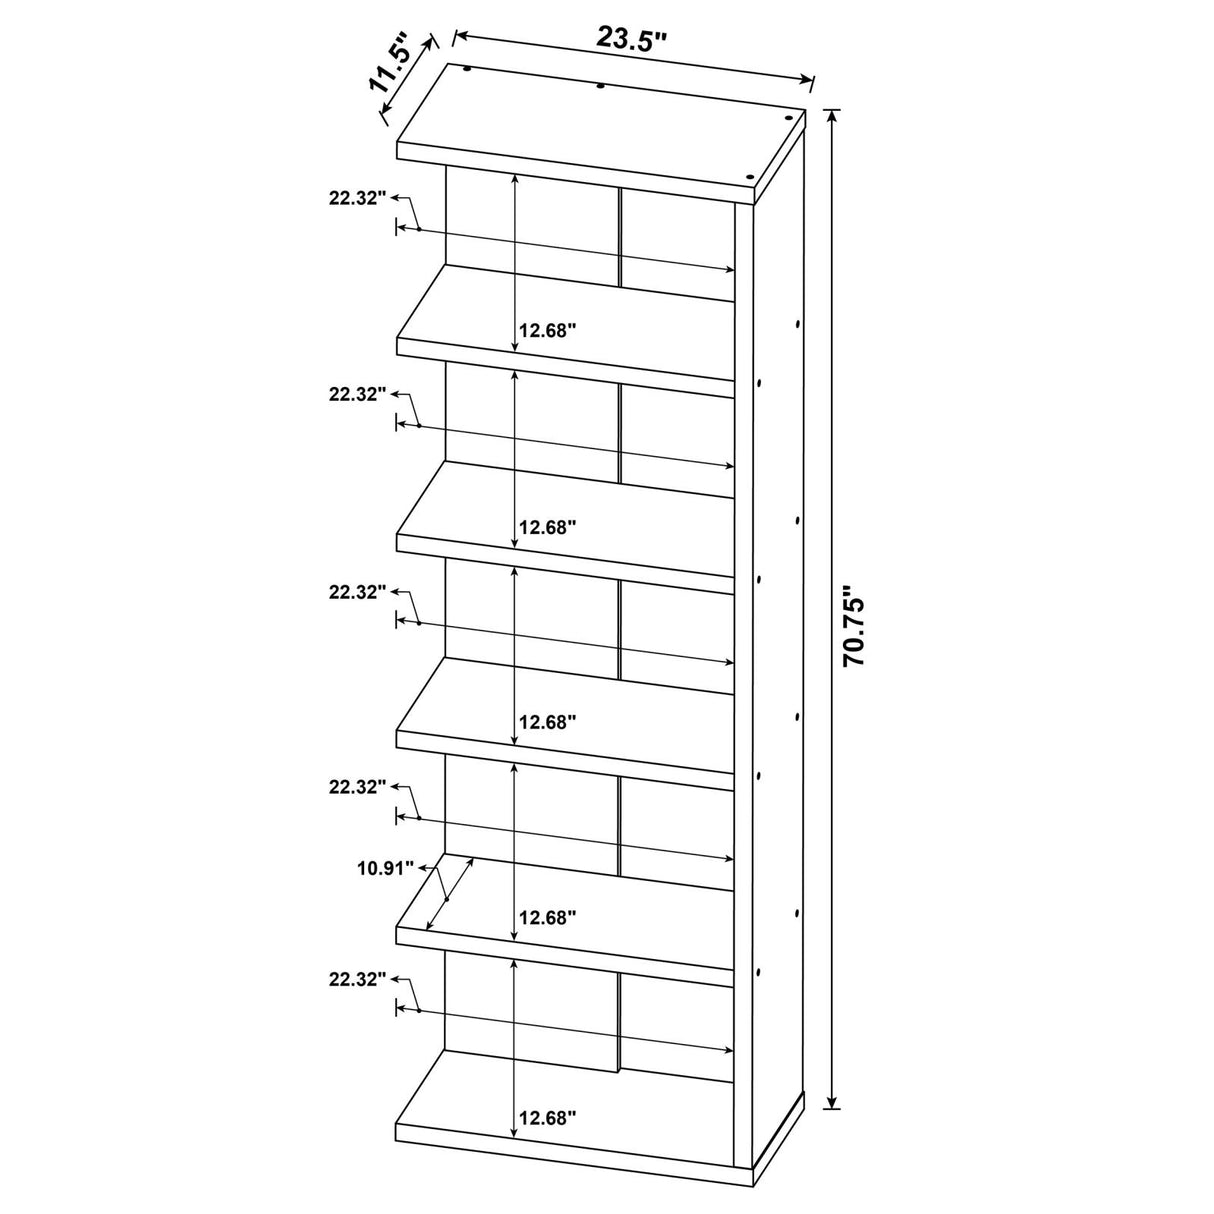 Harrison 5-tier Bookcase Weathered Grey - 800553 - Luna Furniture